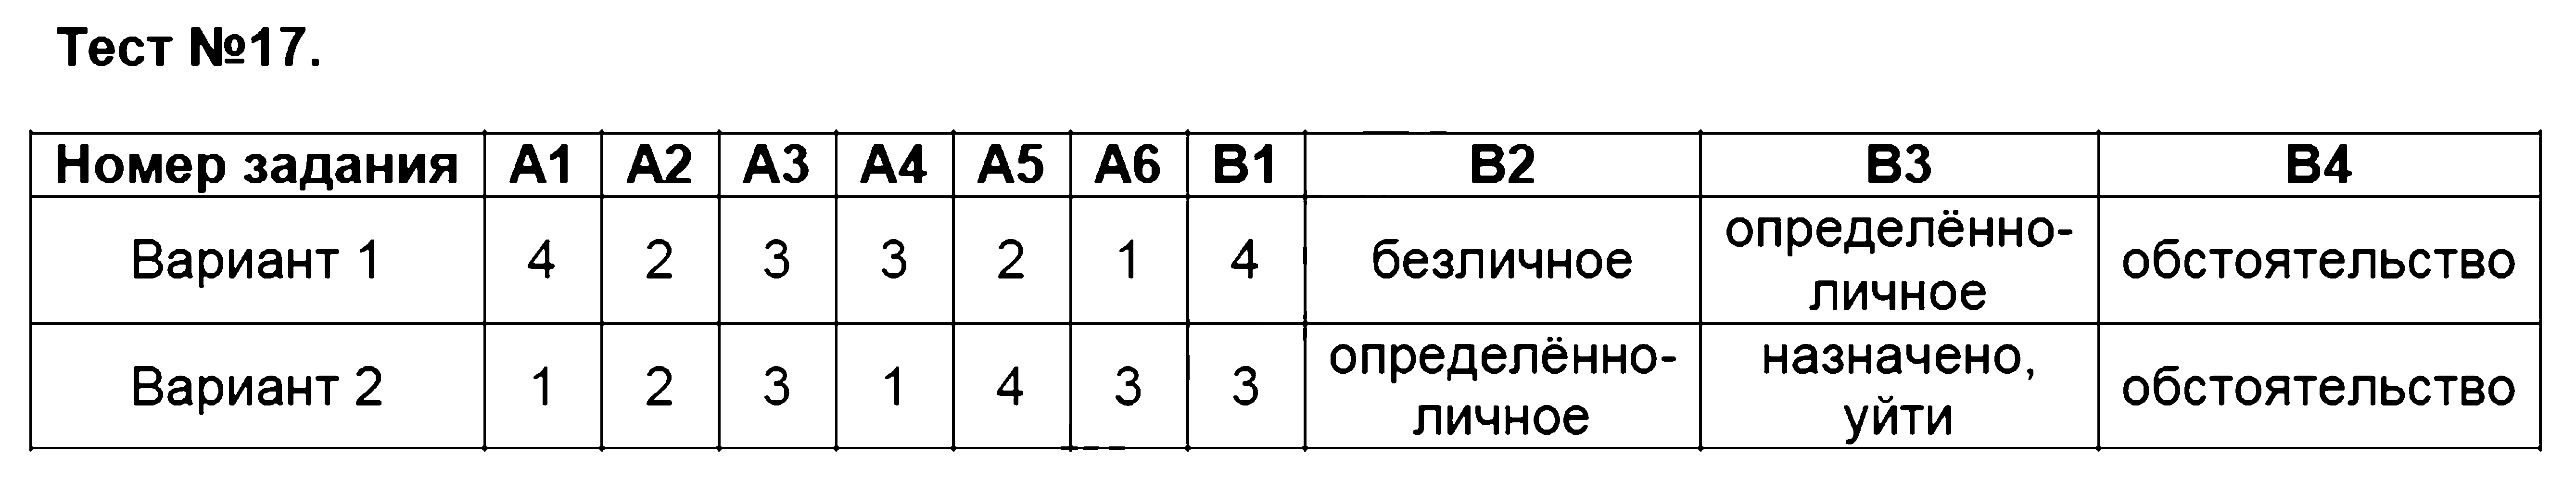 ГДЗ Русский язык 8 класс - Тест 17